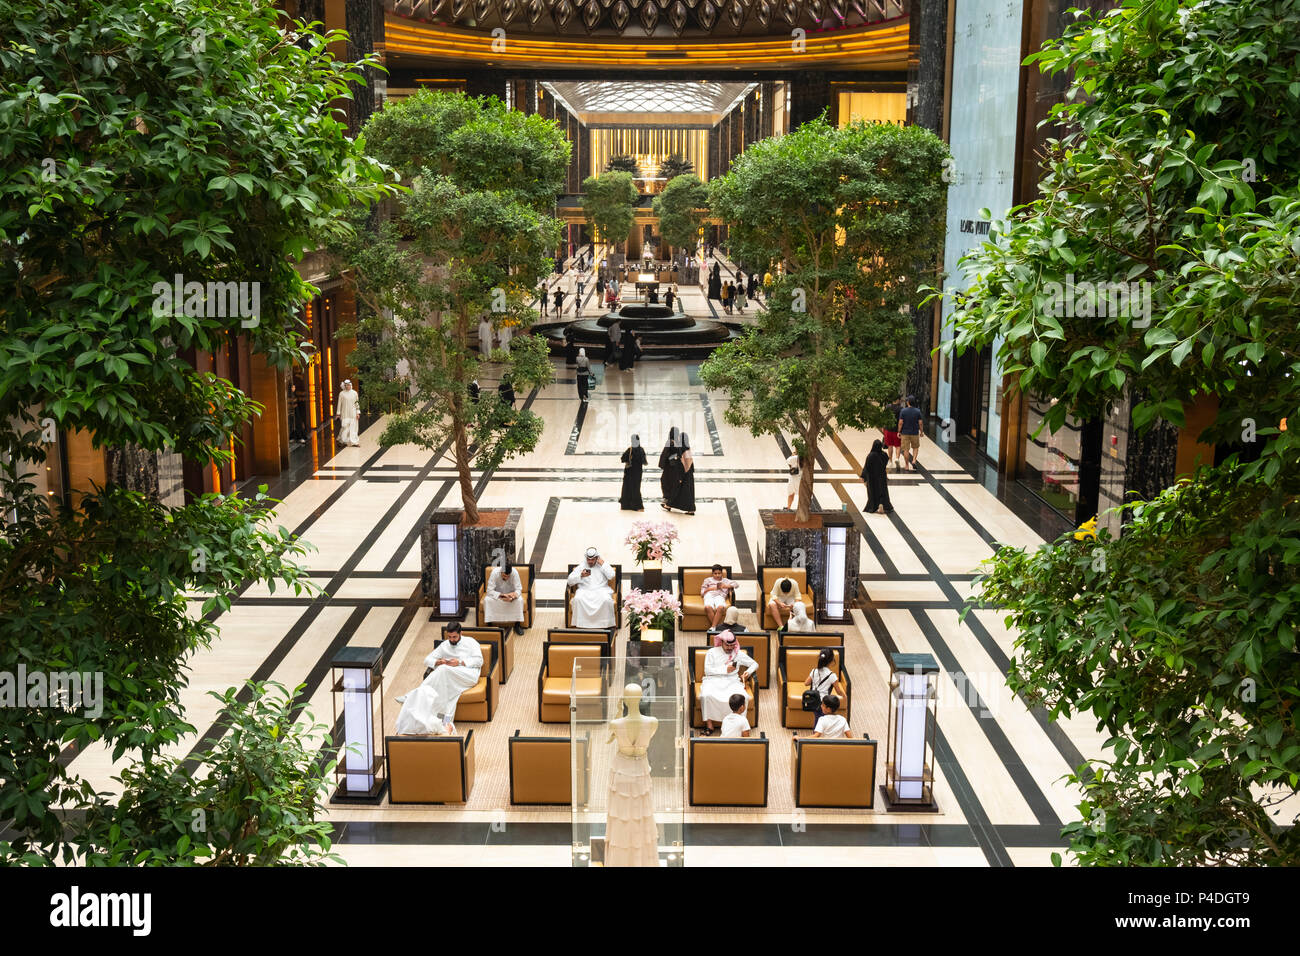 The Avenues Kuwait - Spotted at Louis Vuitton boutique, Prestige, ground  floor. #PrestigeMoments #TheAvenues #Kuwait #q8